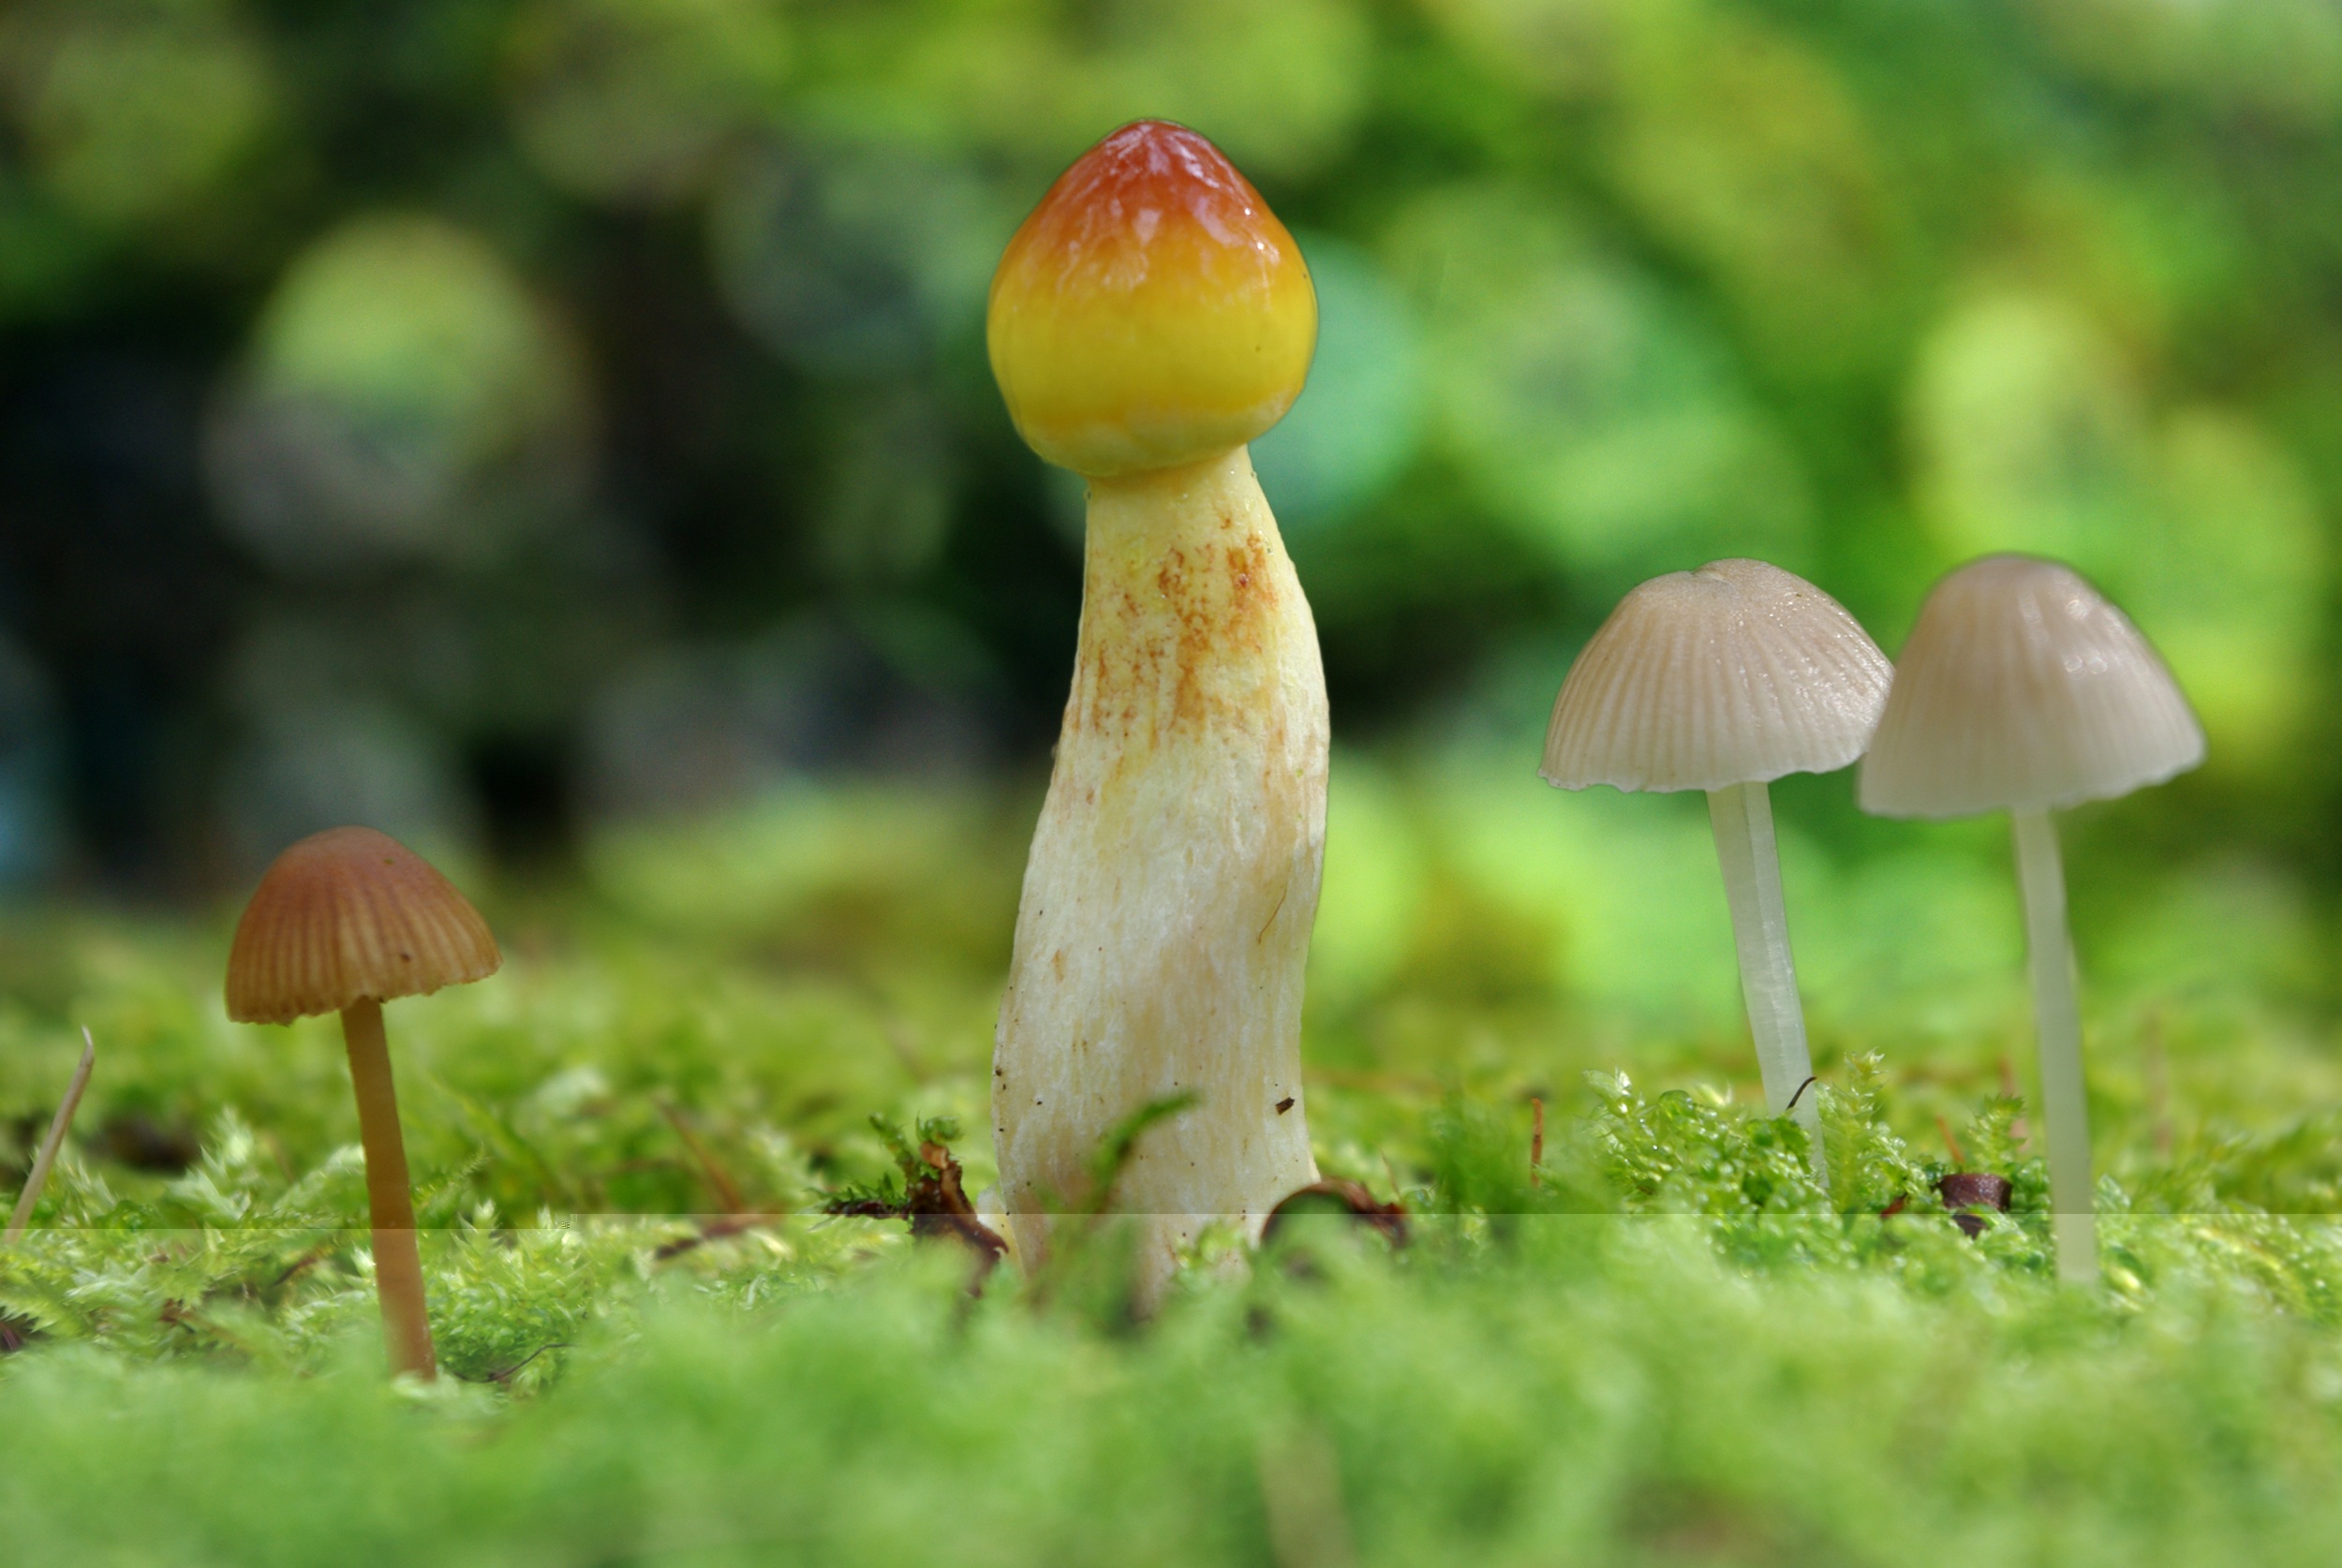 Wild mushrooms in the garden photo